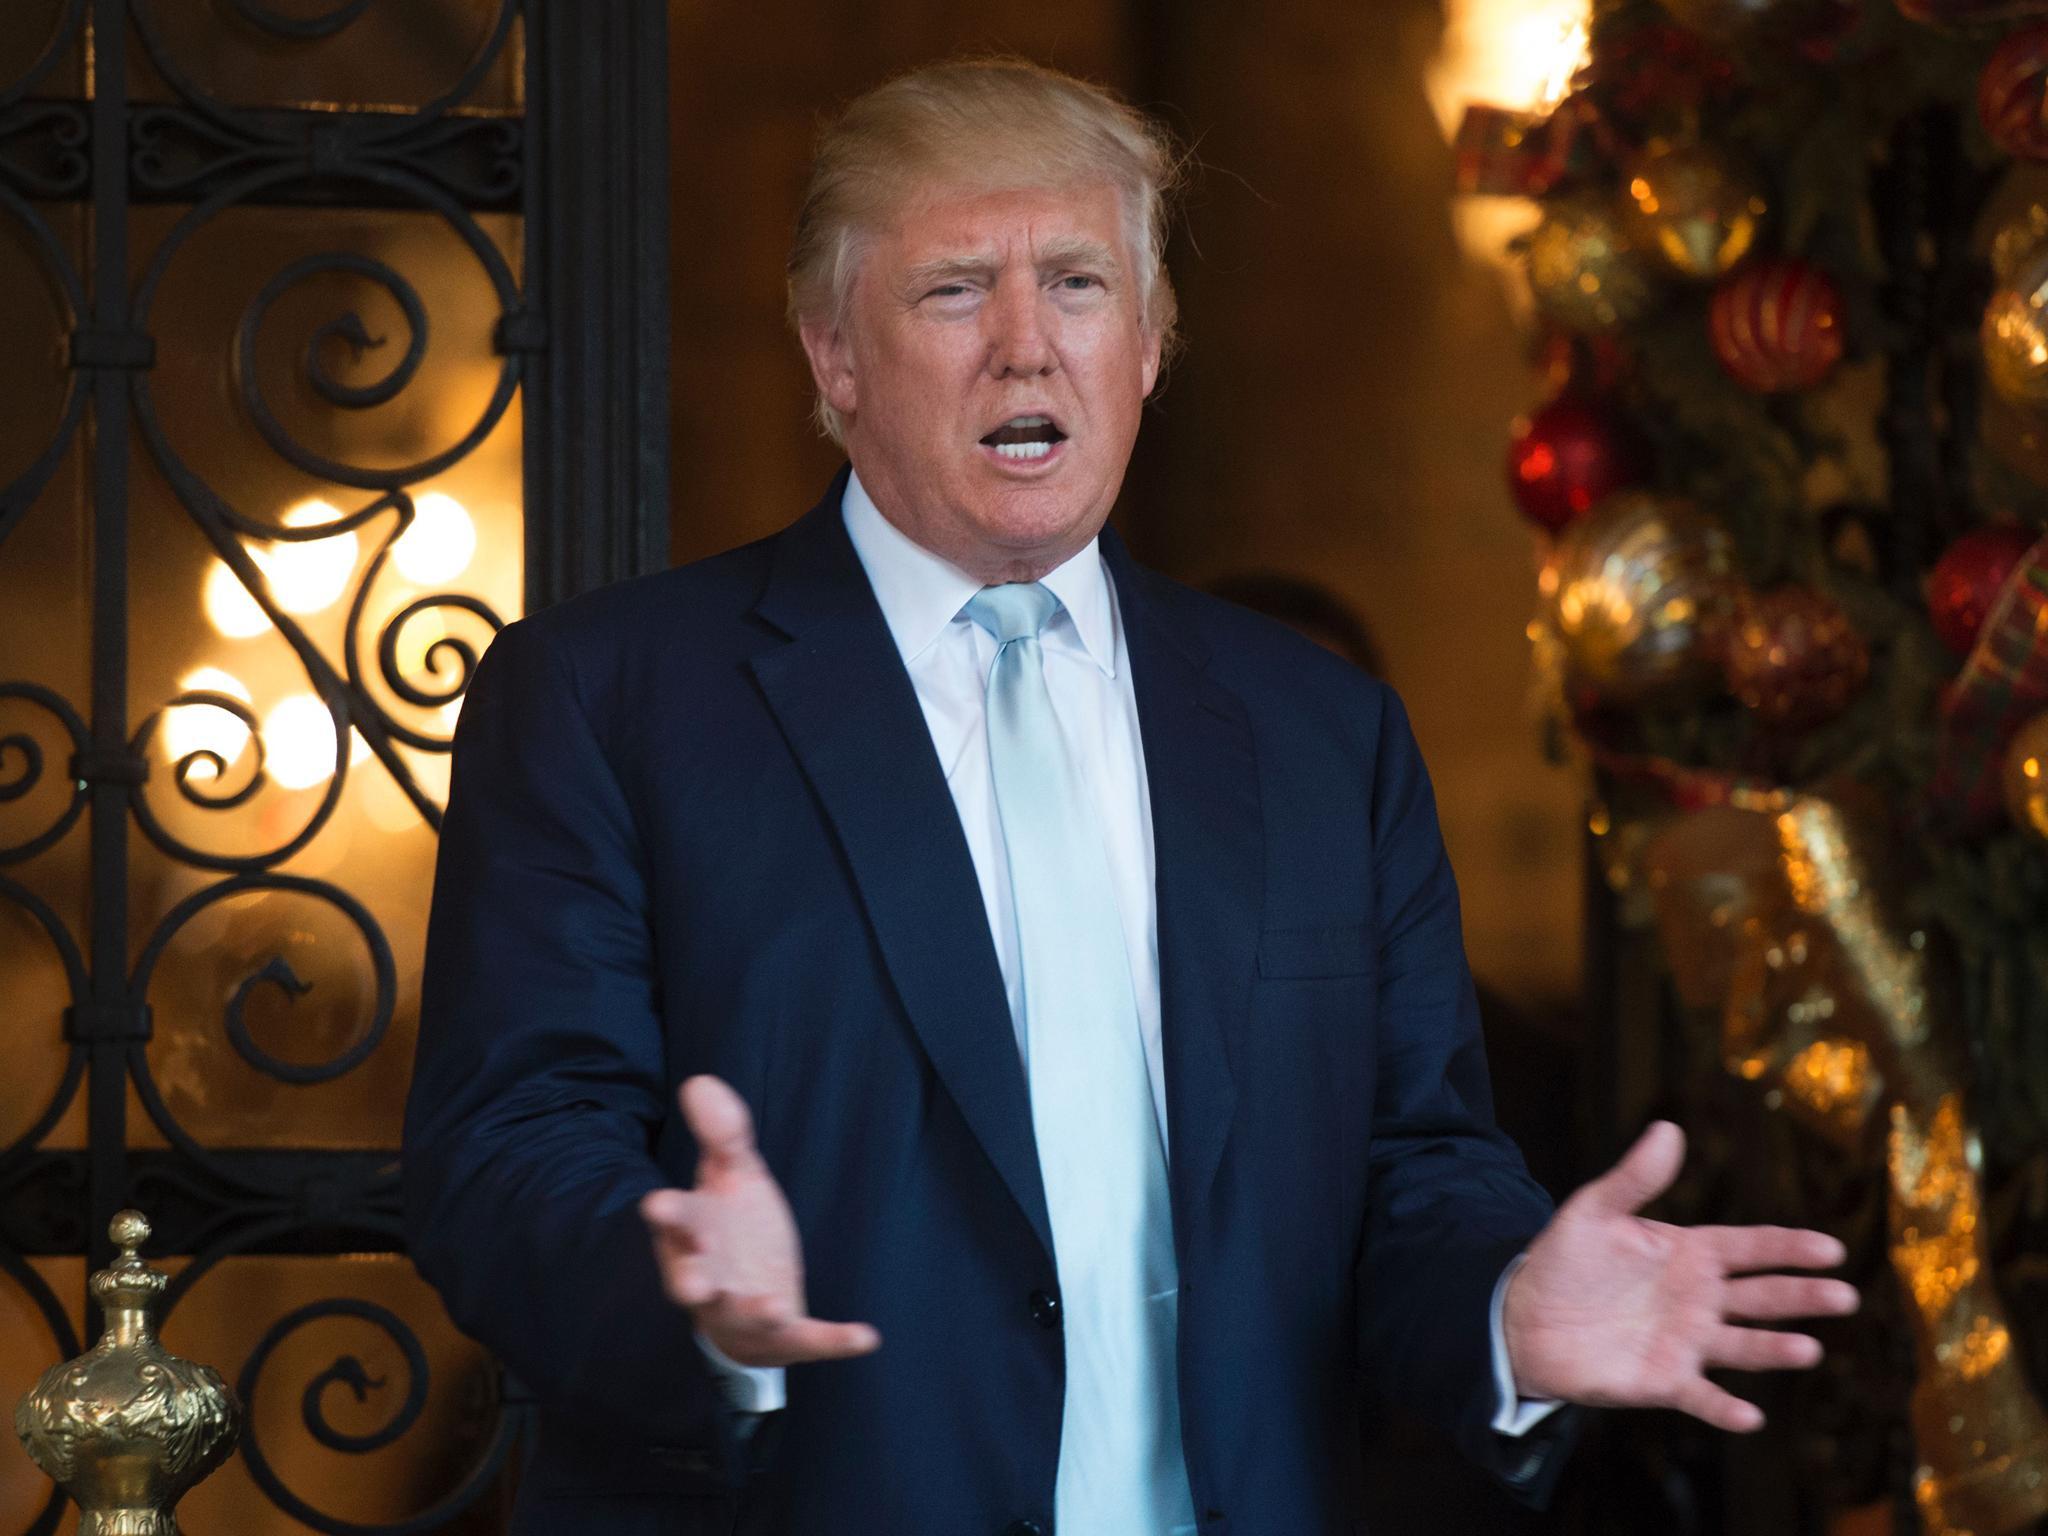 Donald Trump spoke to reporters at his Mar-a-Lago resort in Florida